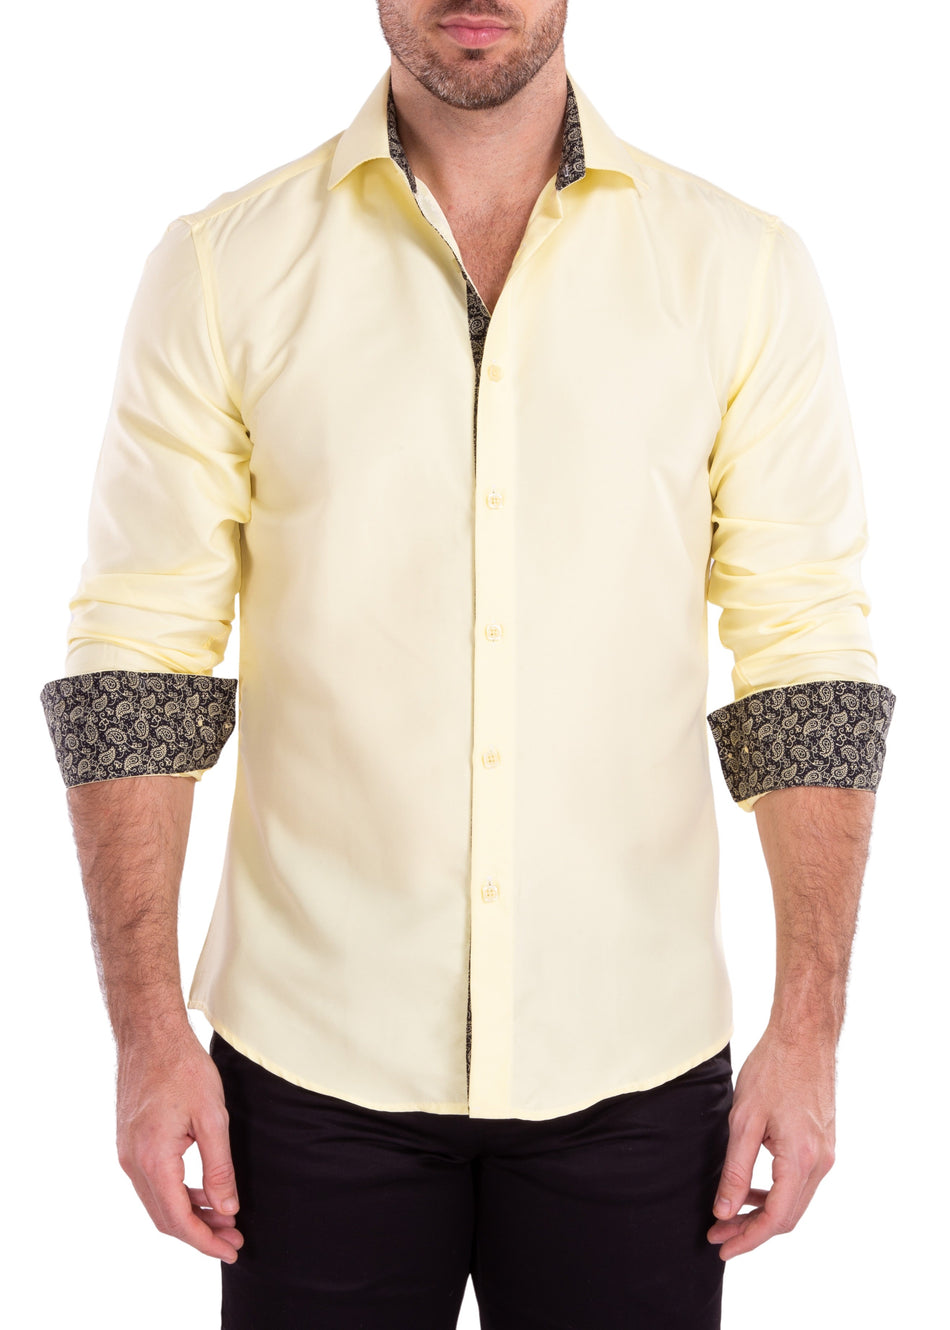 212350 - Yellow Long Sleeve Shirt